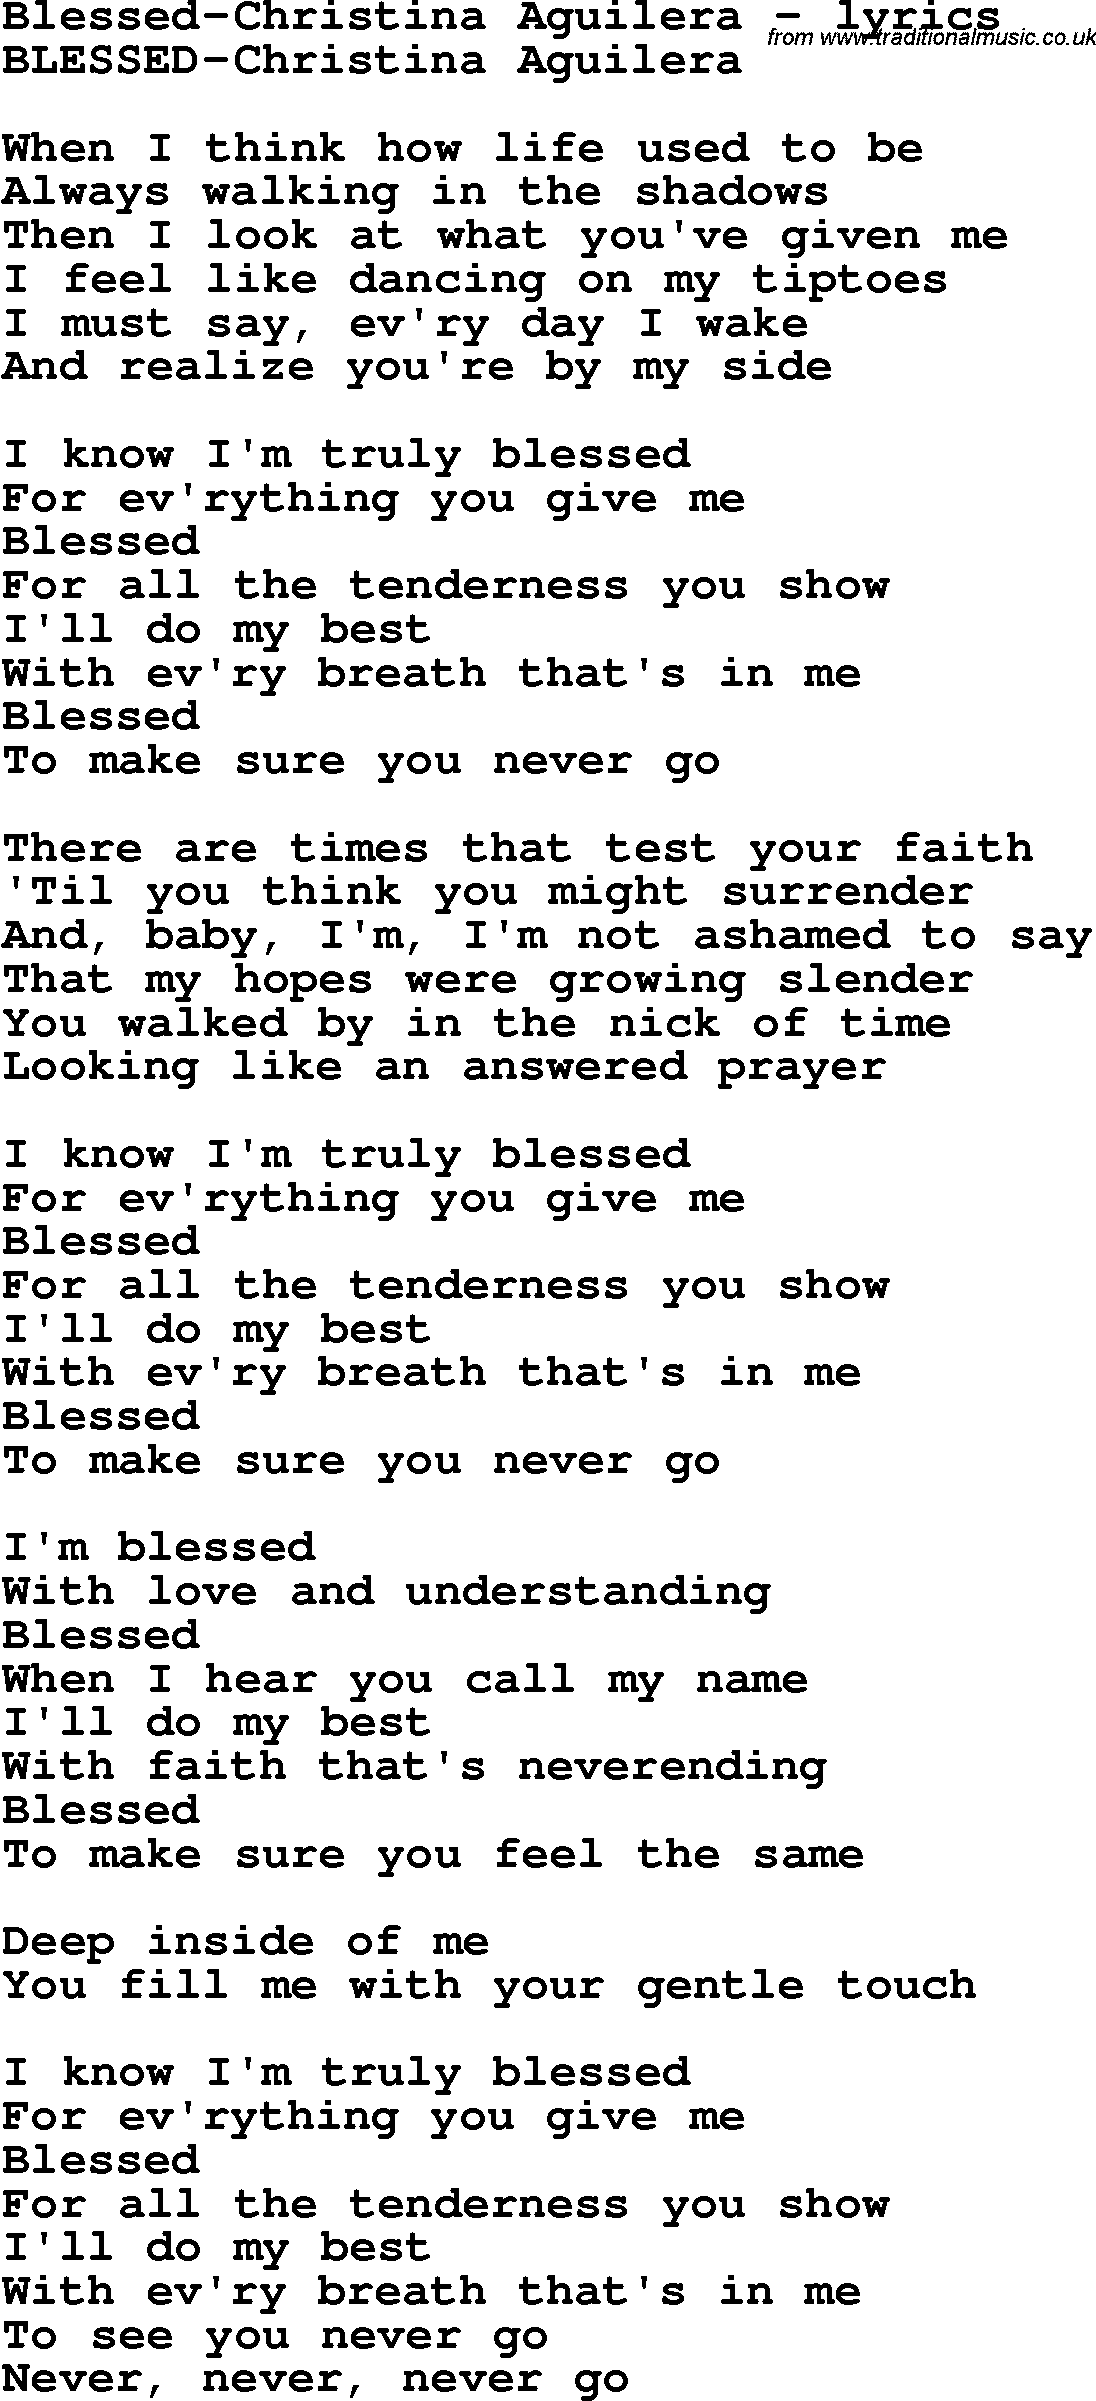 Love Song Lyrics for: Blessed-Christina Aguilera